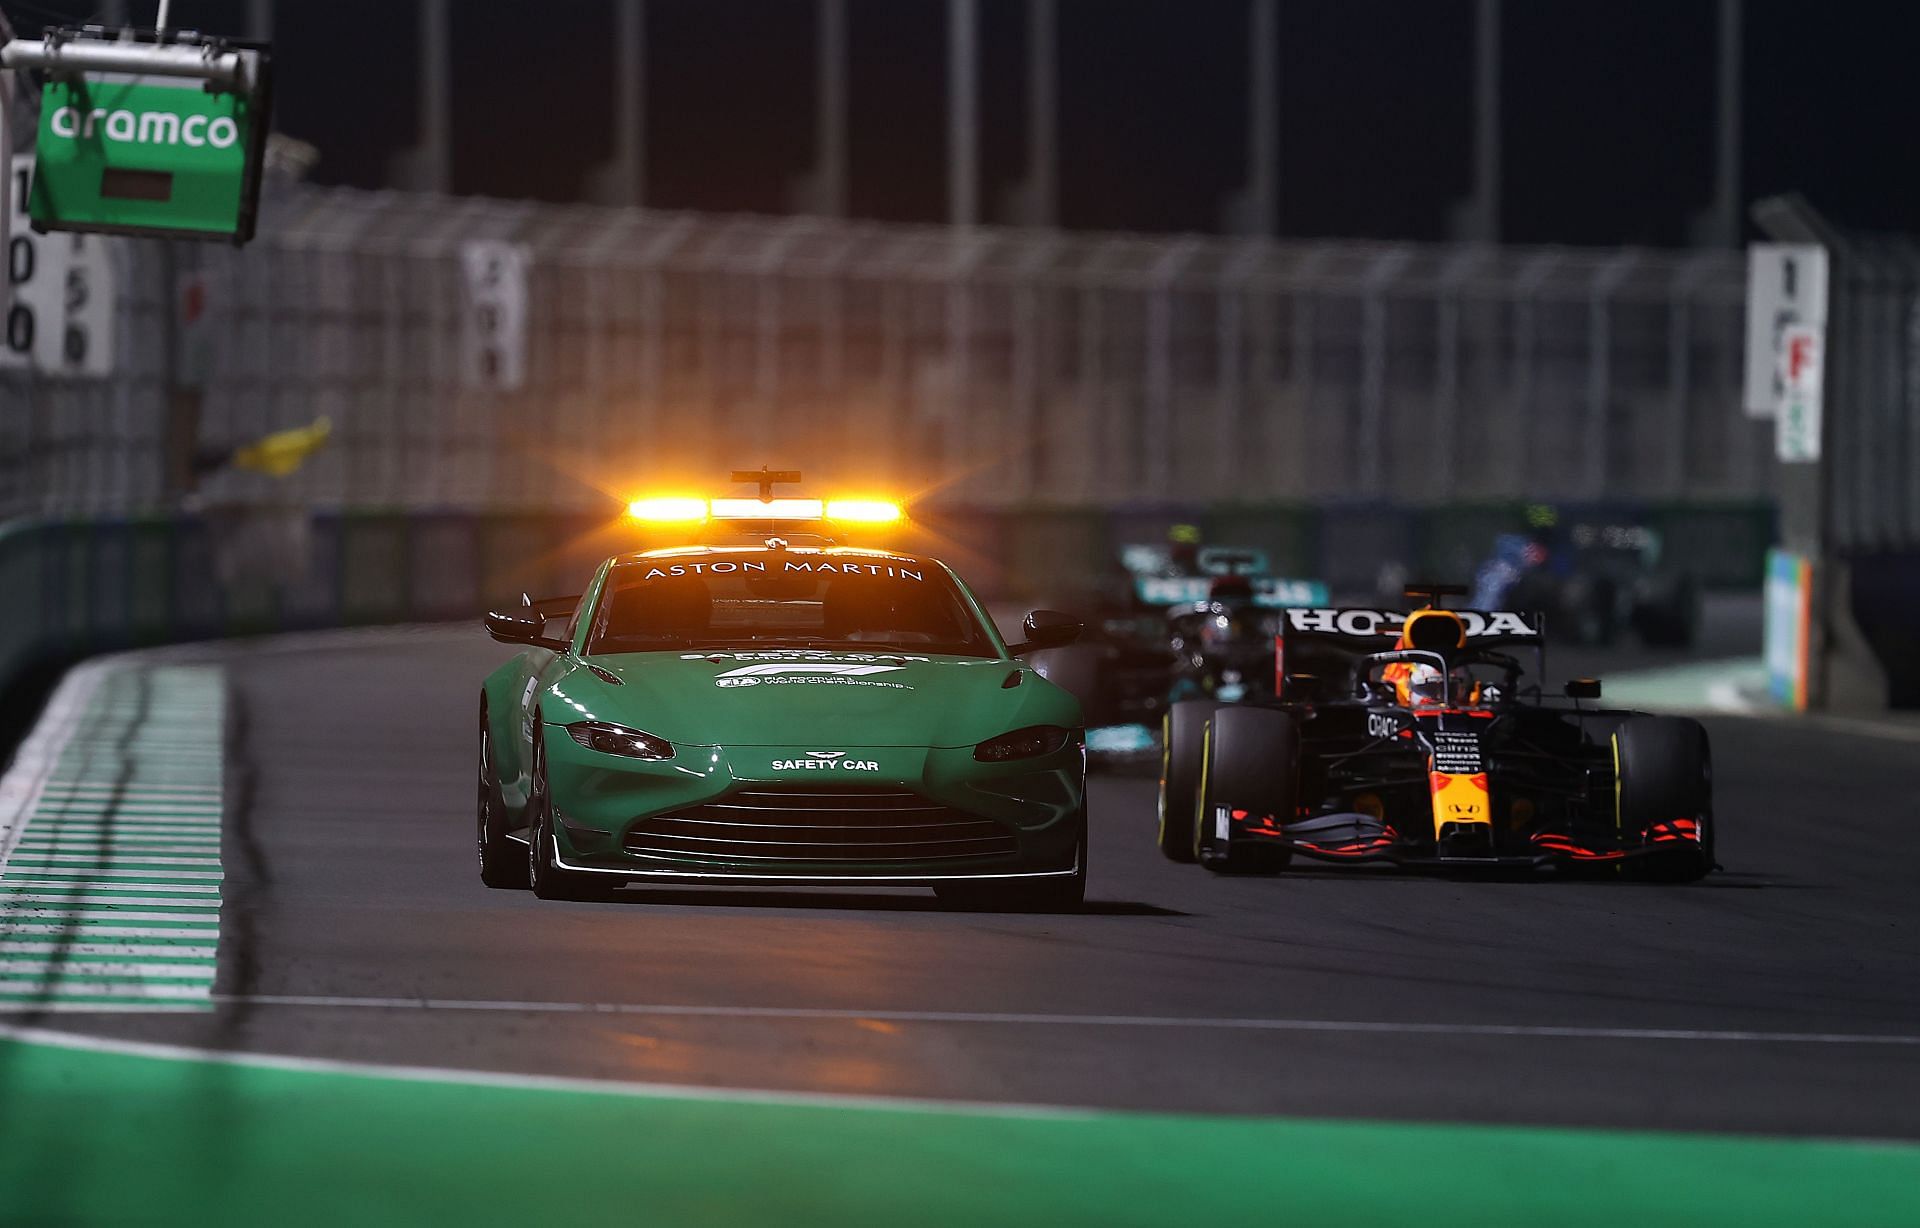 The customized Aston Martin Vantage Safety car at the Saudi Arabian GP